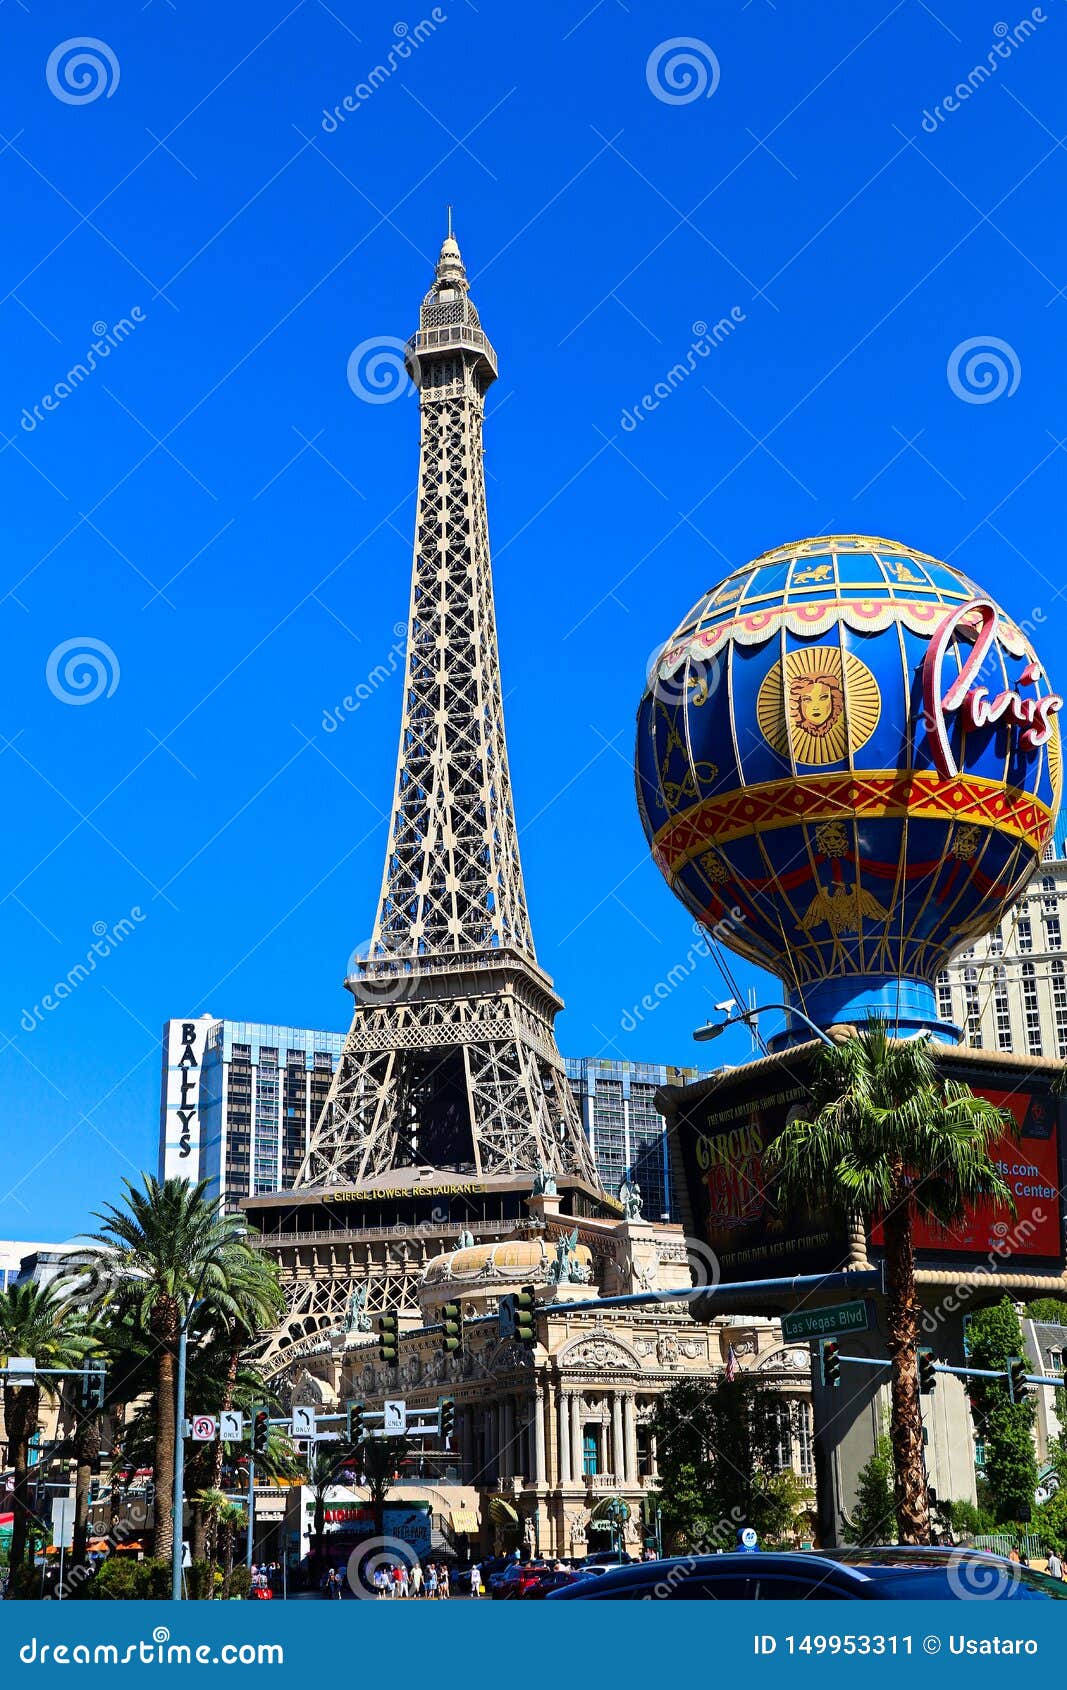 Hotel Paris - The Paris themed hotel of Las Vegas